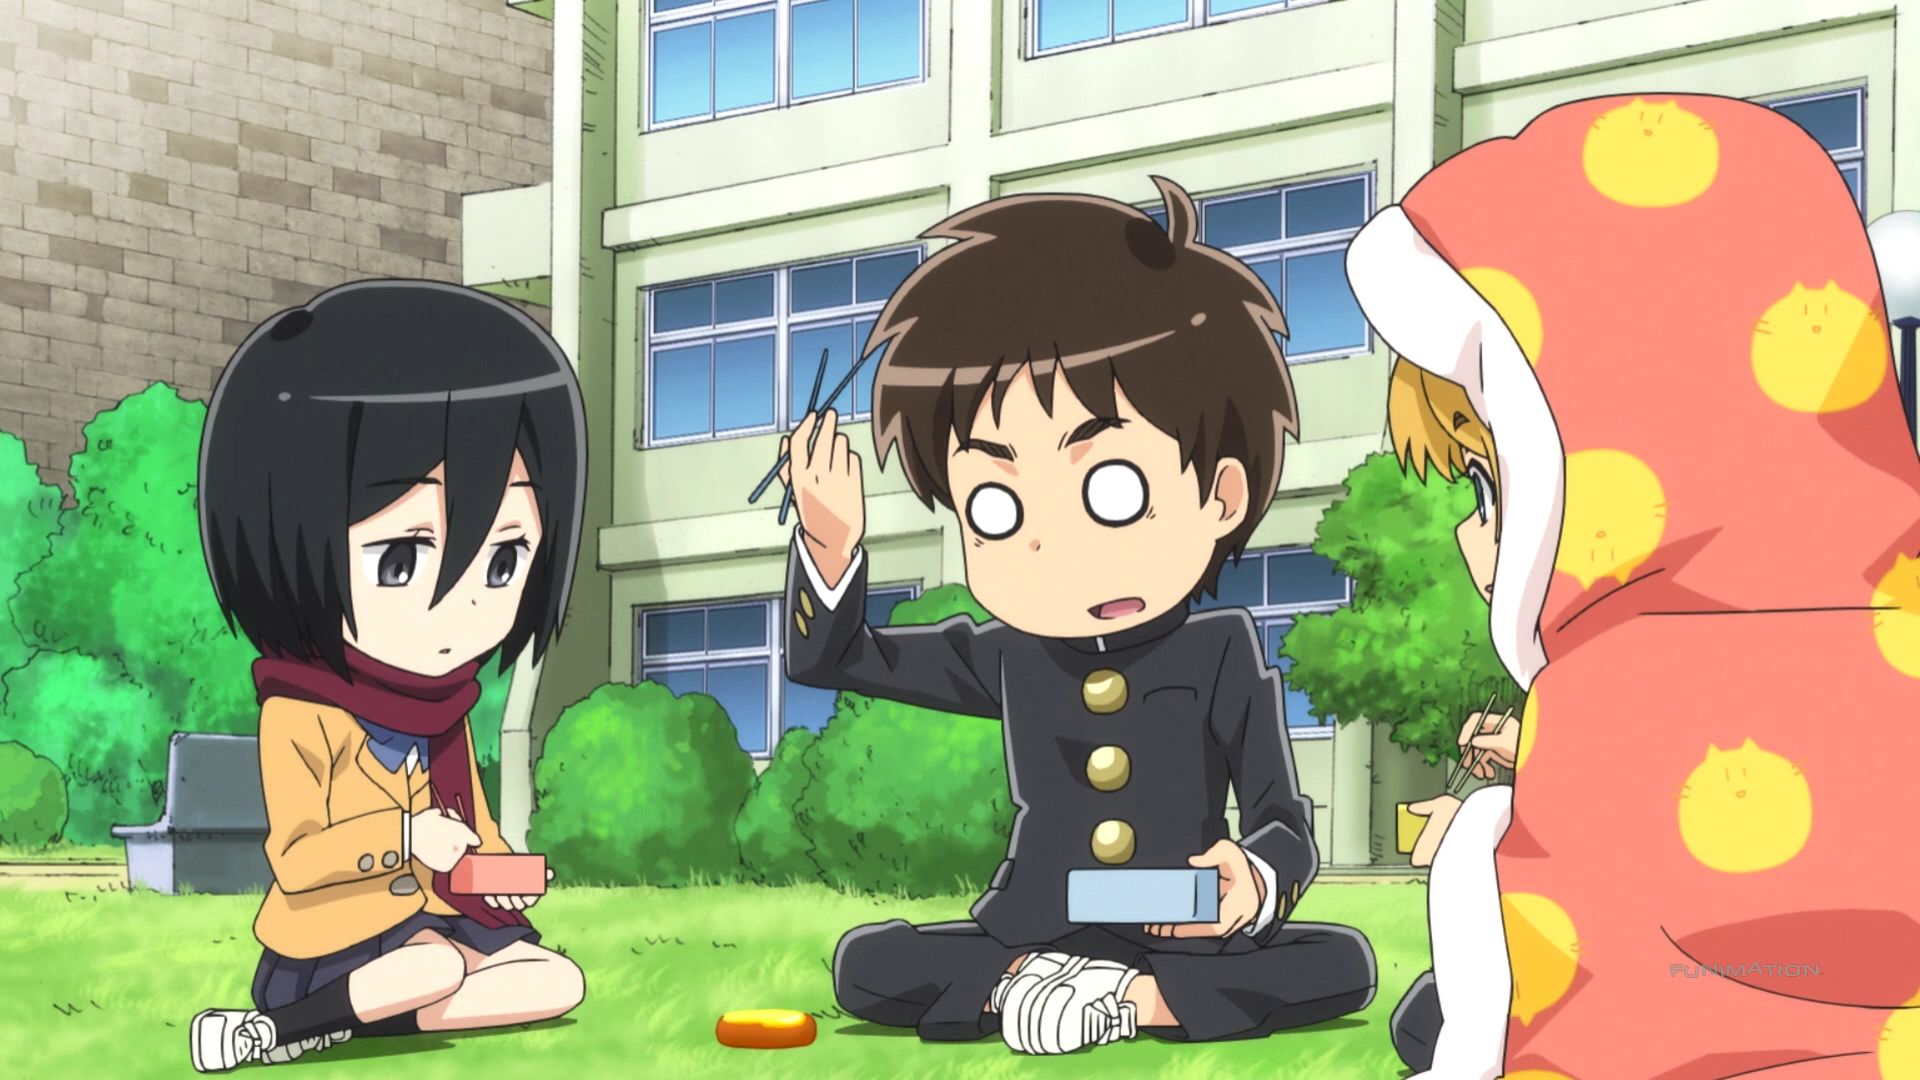 Shingeki! Kyojin Chuugakkou / Episode 3 / Mikasa, Eren, and Armin eating lunch together following their intense dodgeball tournament